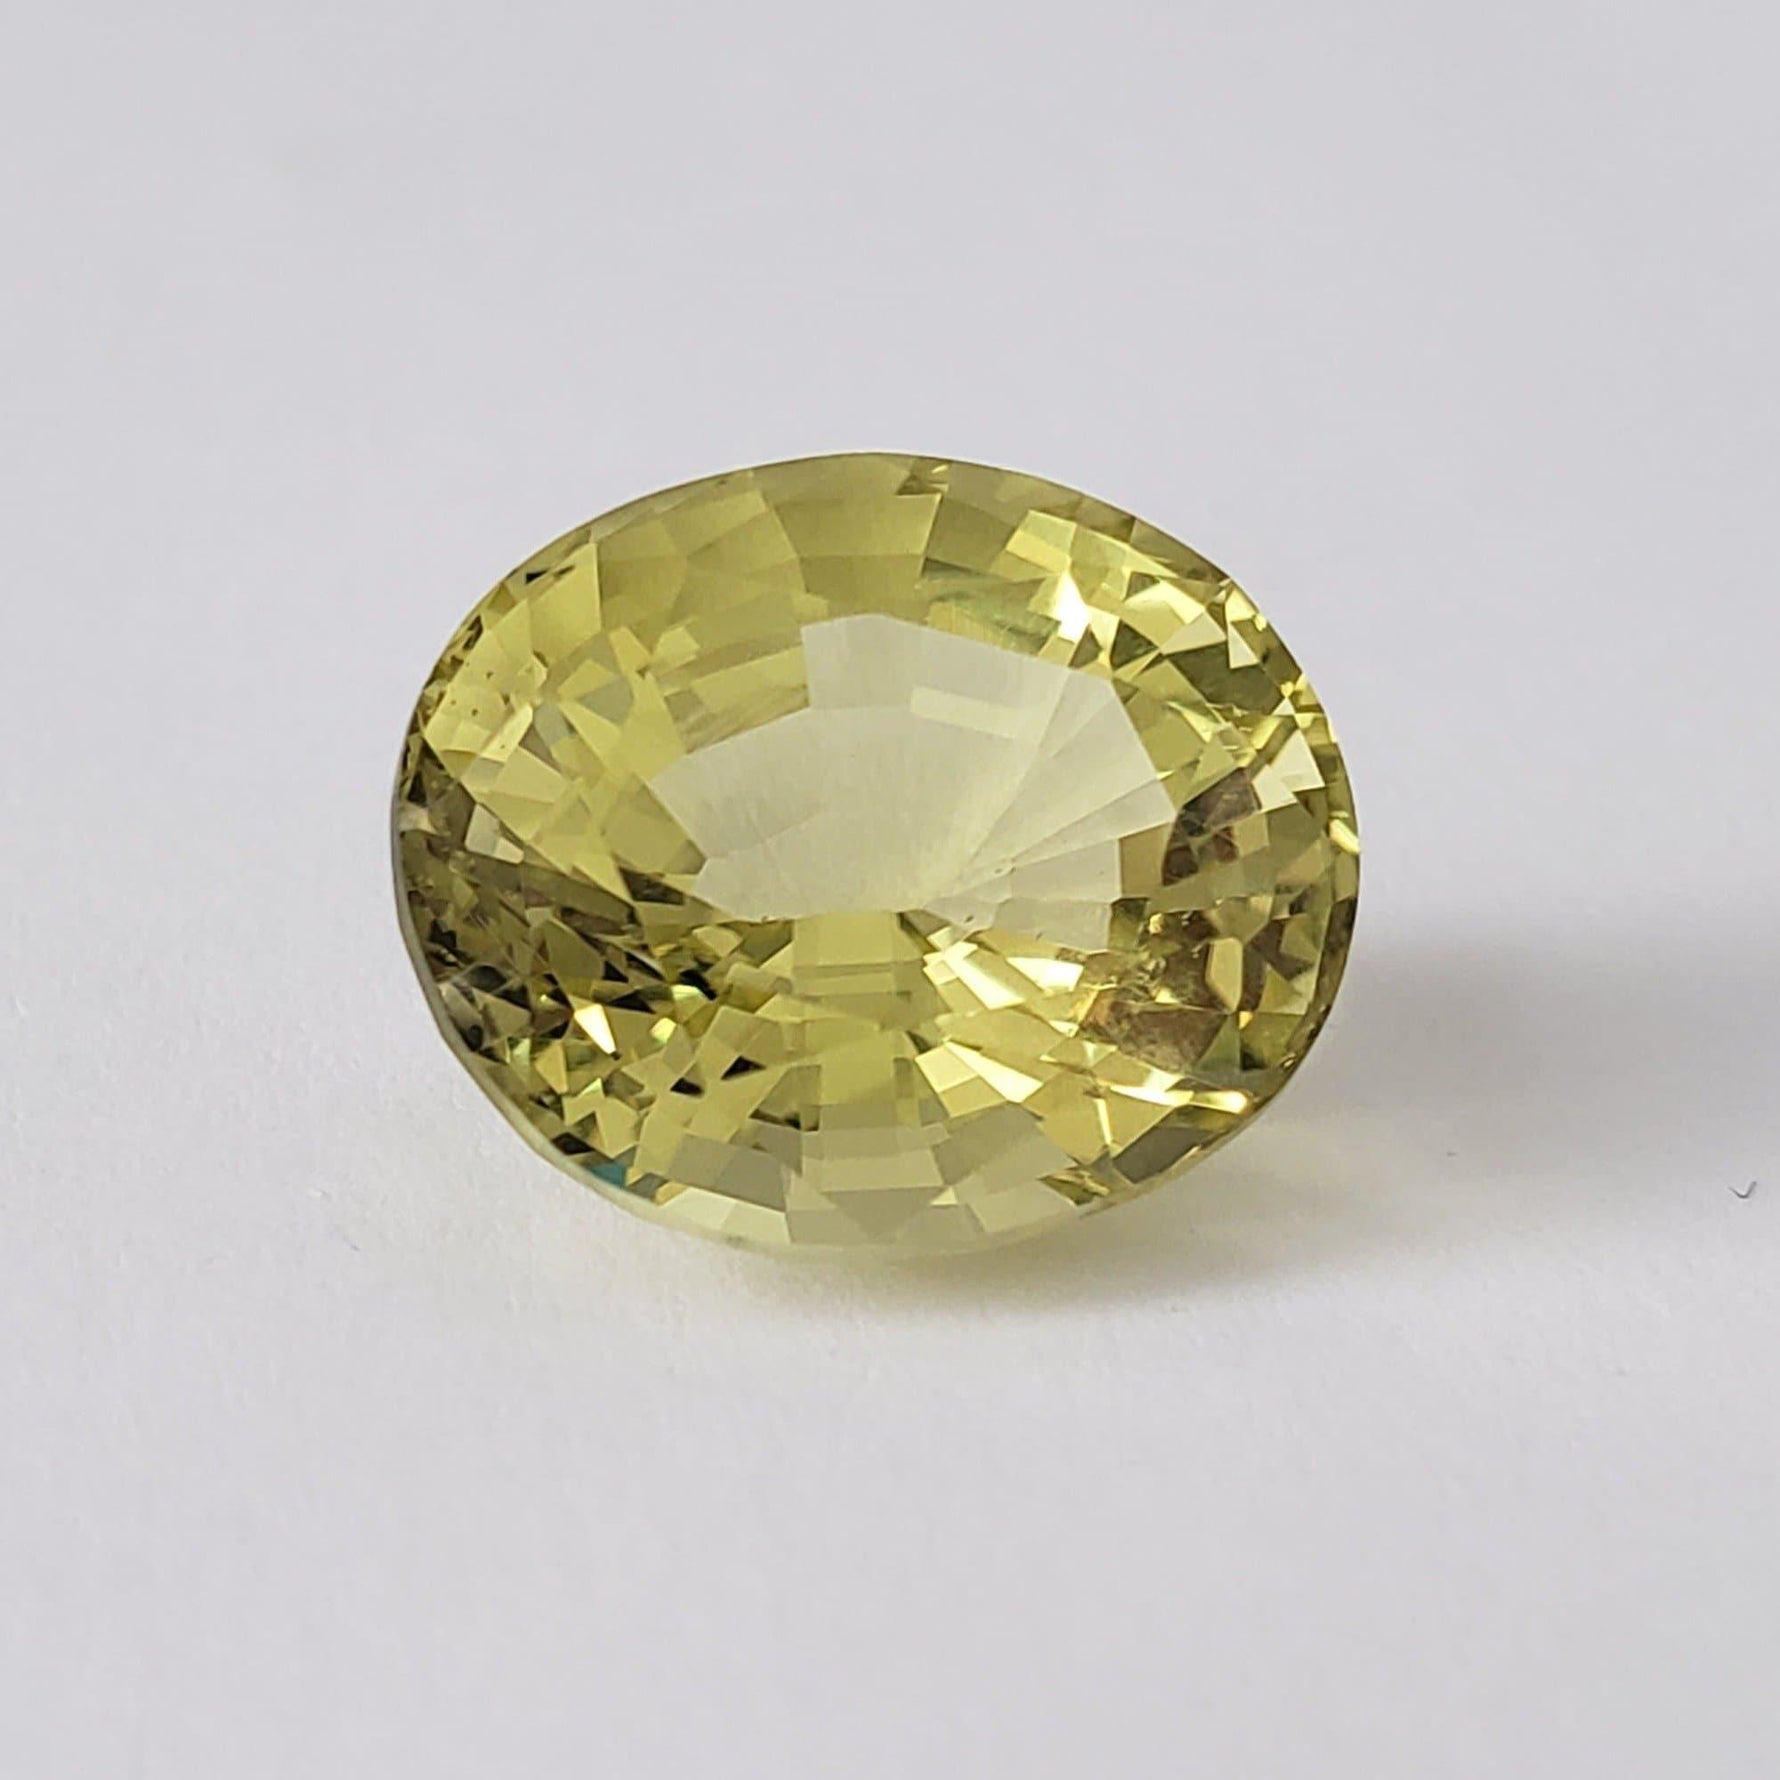 Lemon Quartz | Faceted Oval Cut | Greenish Yellow | 14x12mm 9.04ct